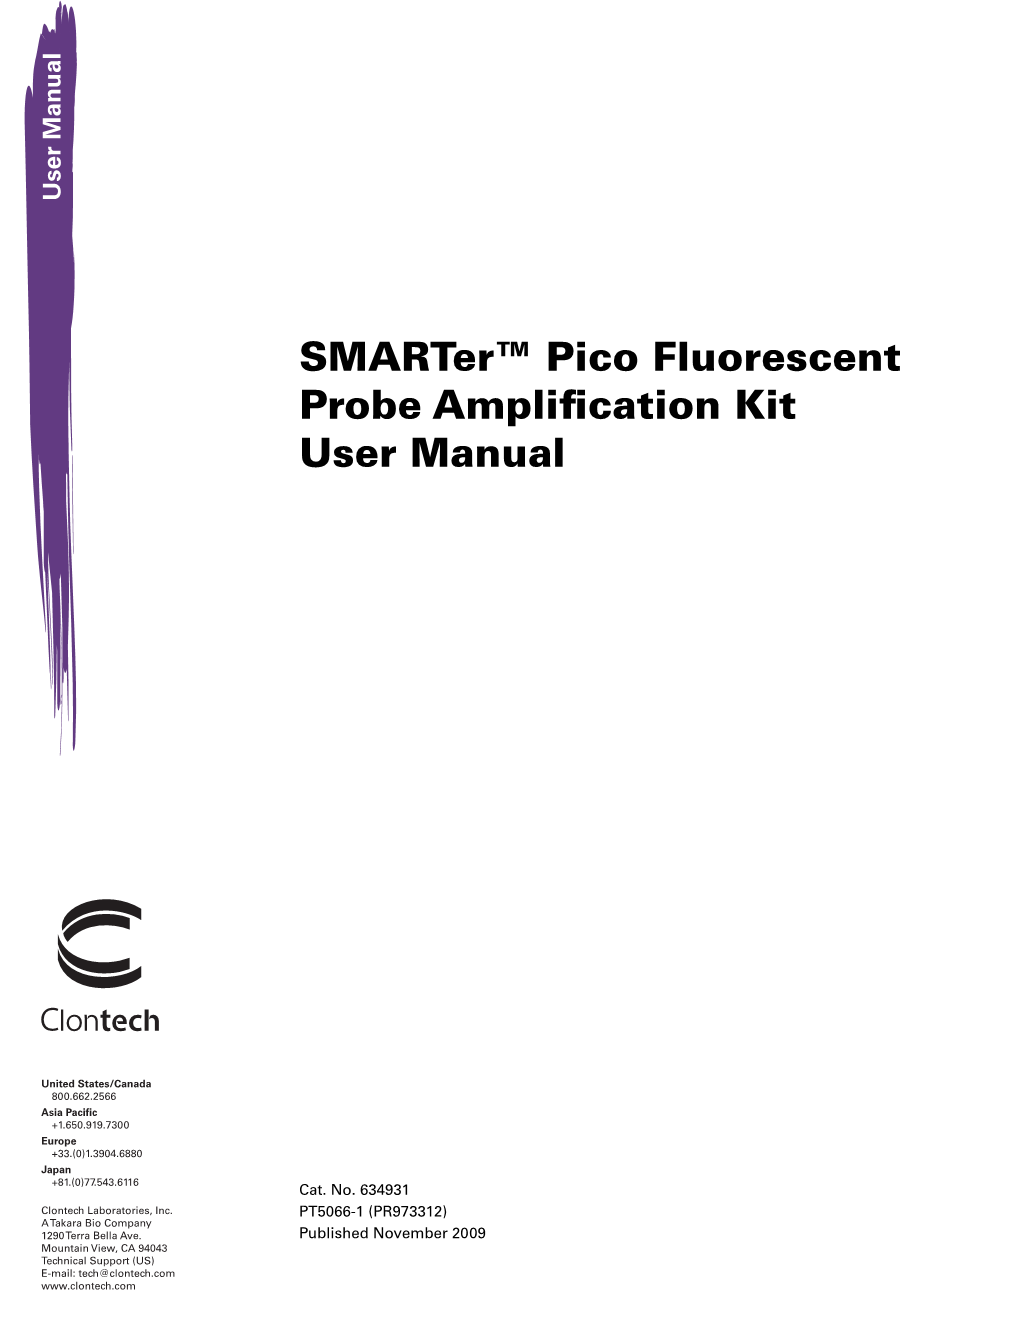 Smarter™ Pico Fluorescent Probe Amplification Kit User Manual